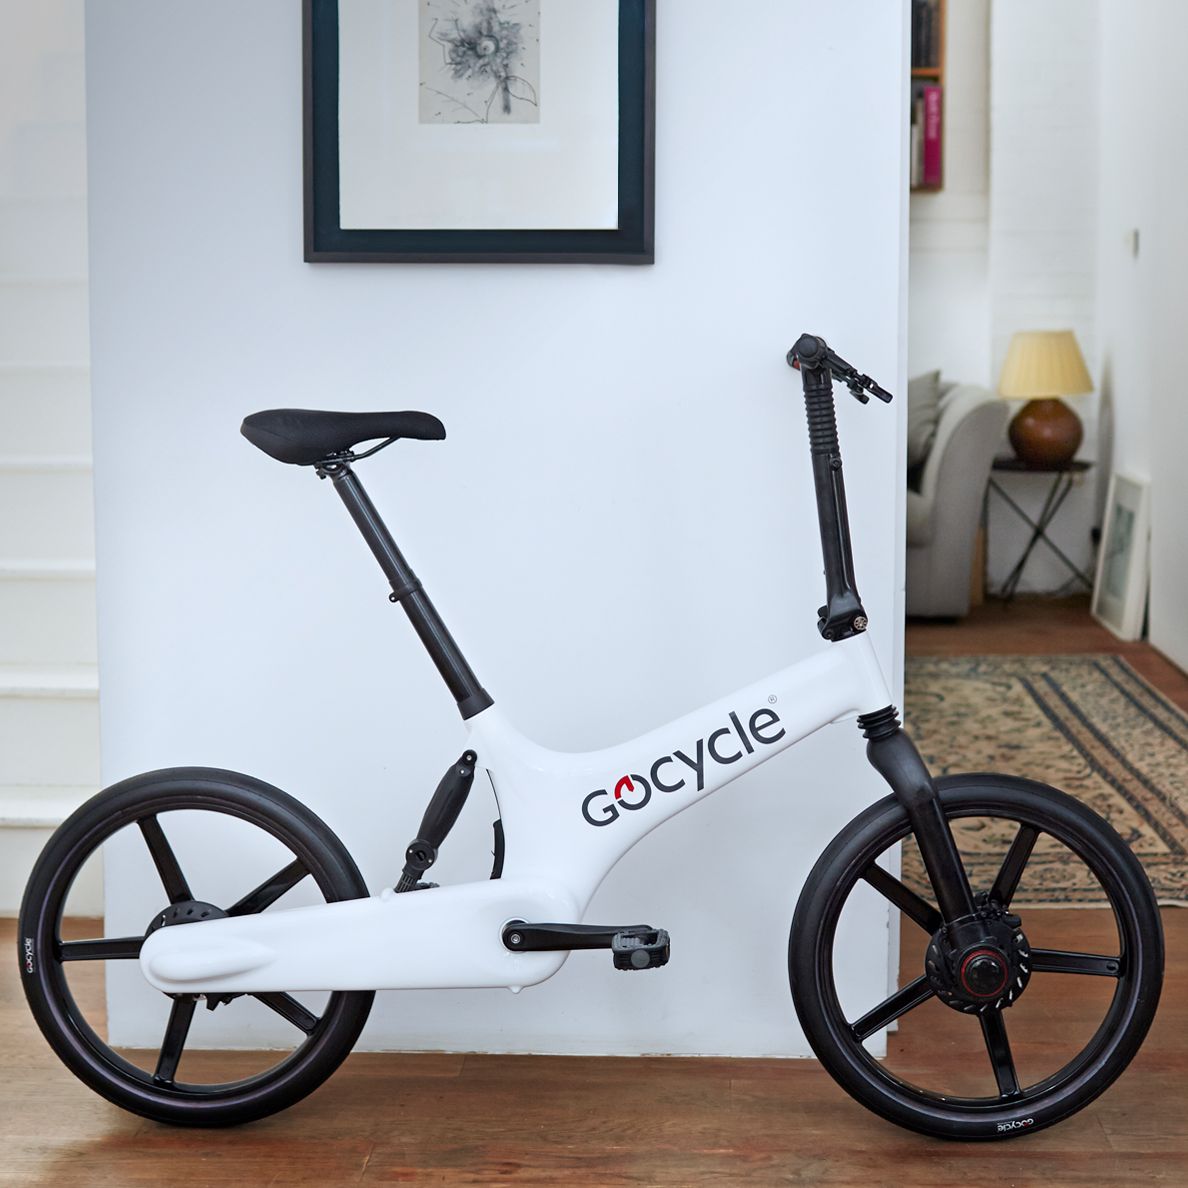 gocycle sale